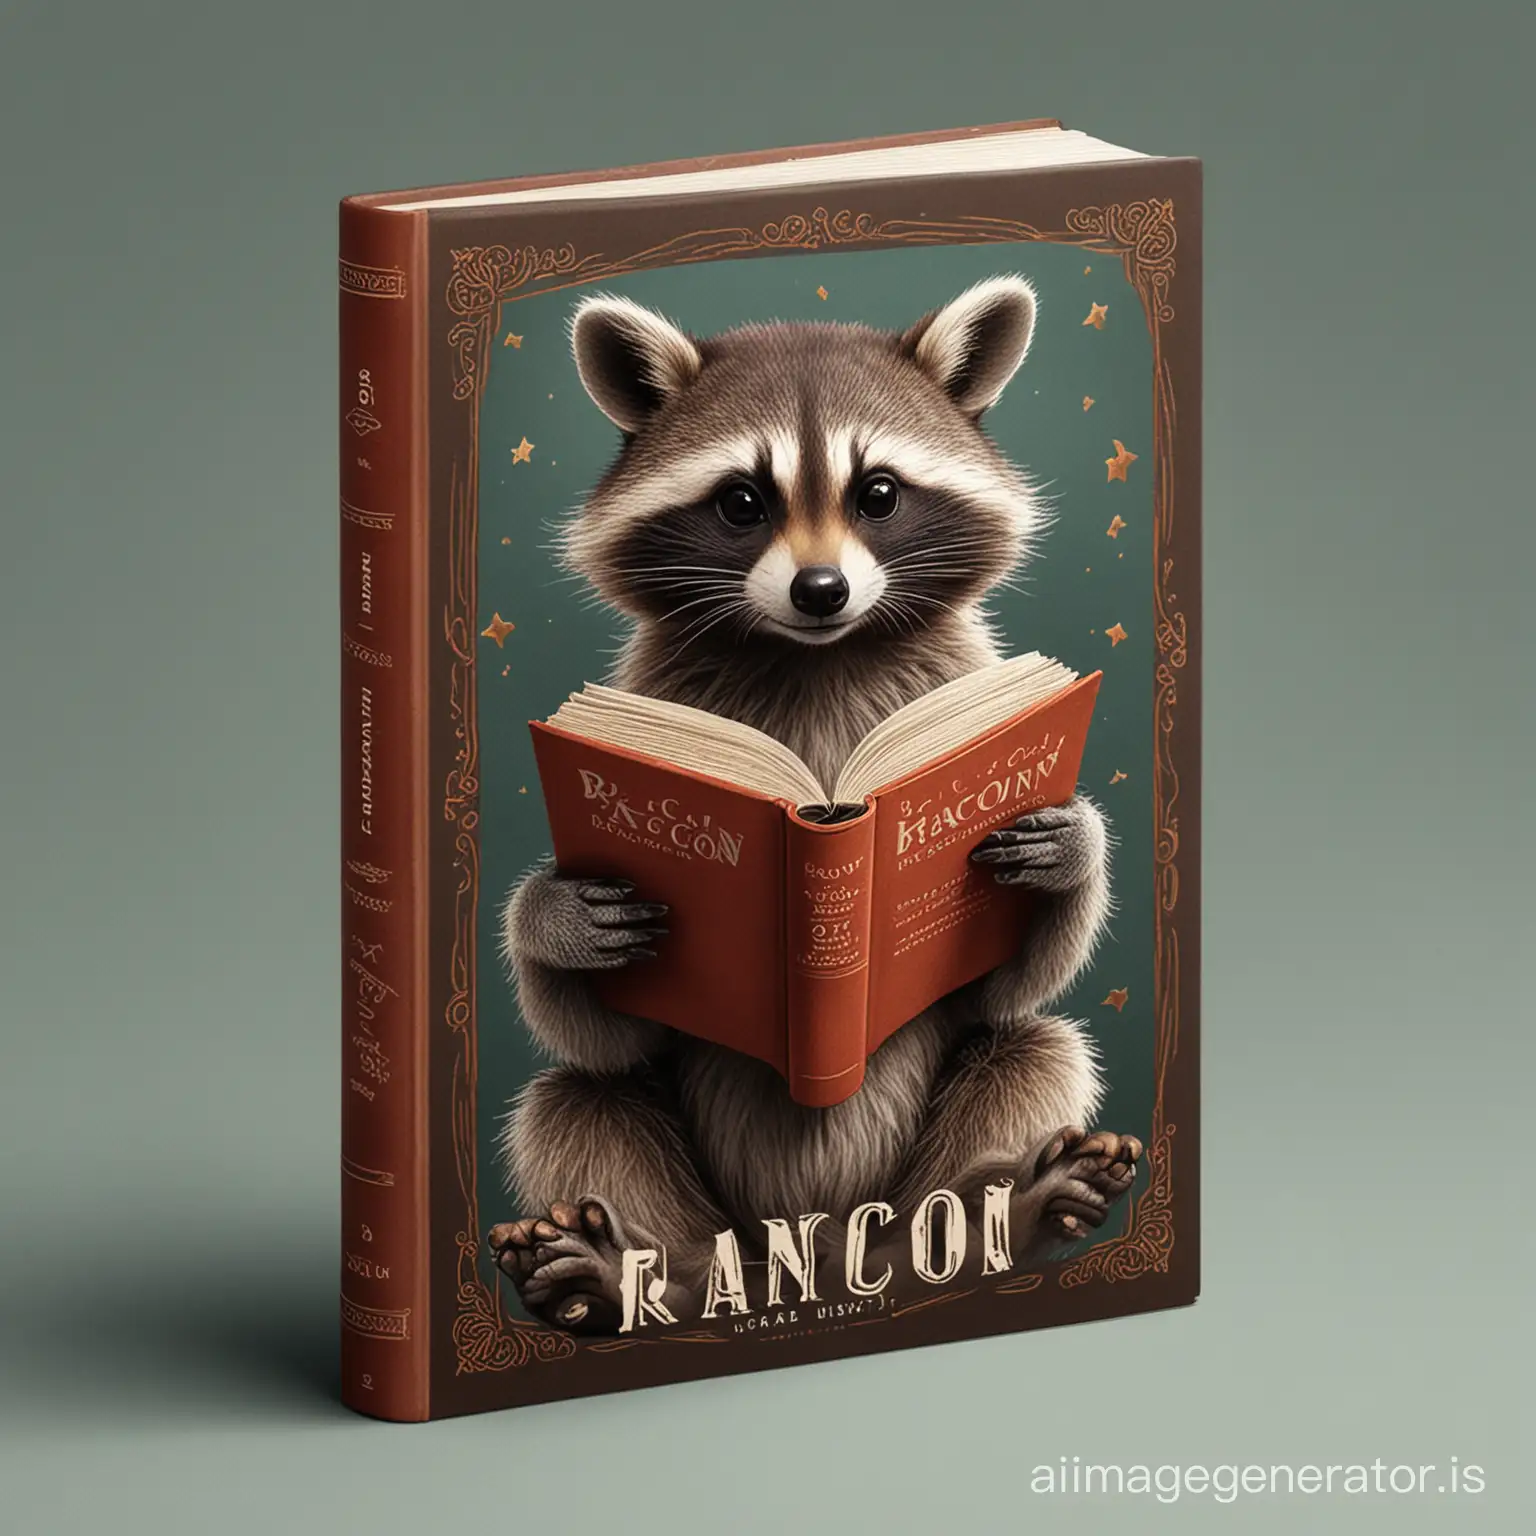 raccon read book design